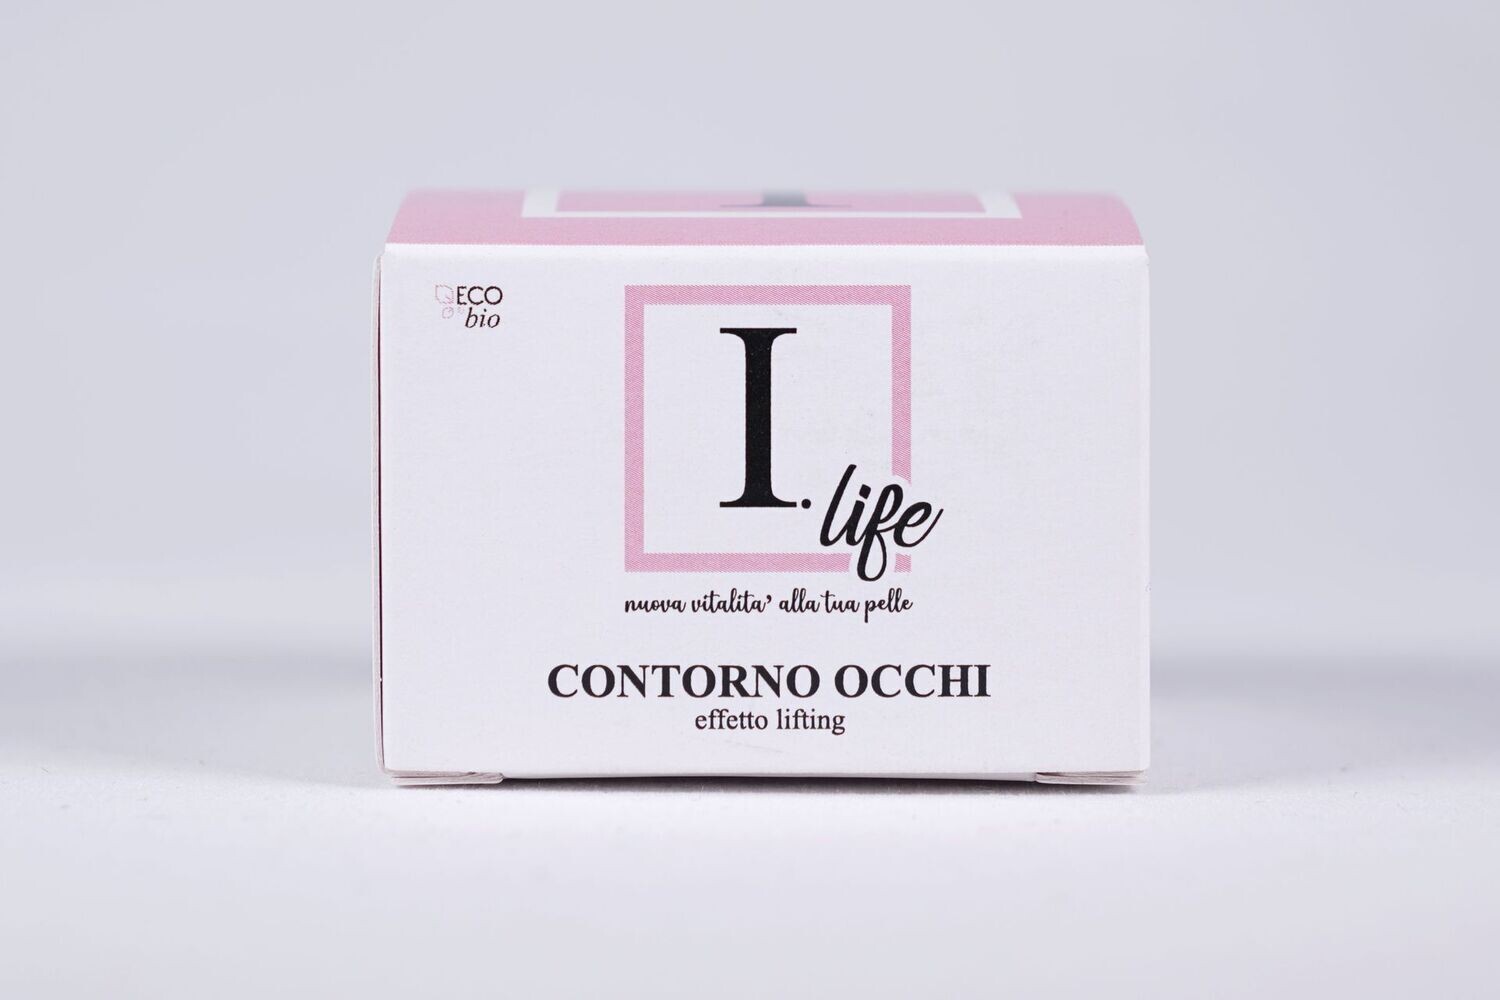 CONTORNO OCCHI EFFETTO LIFTING